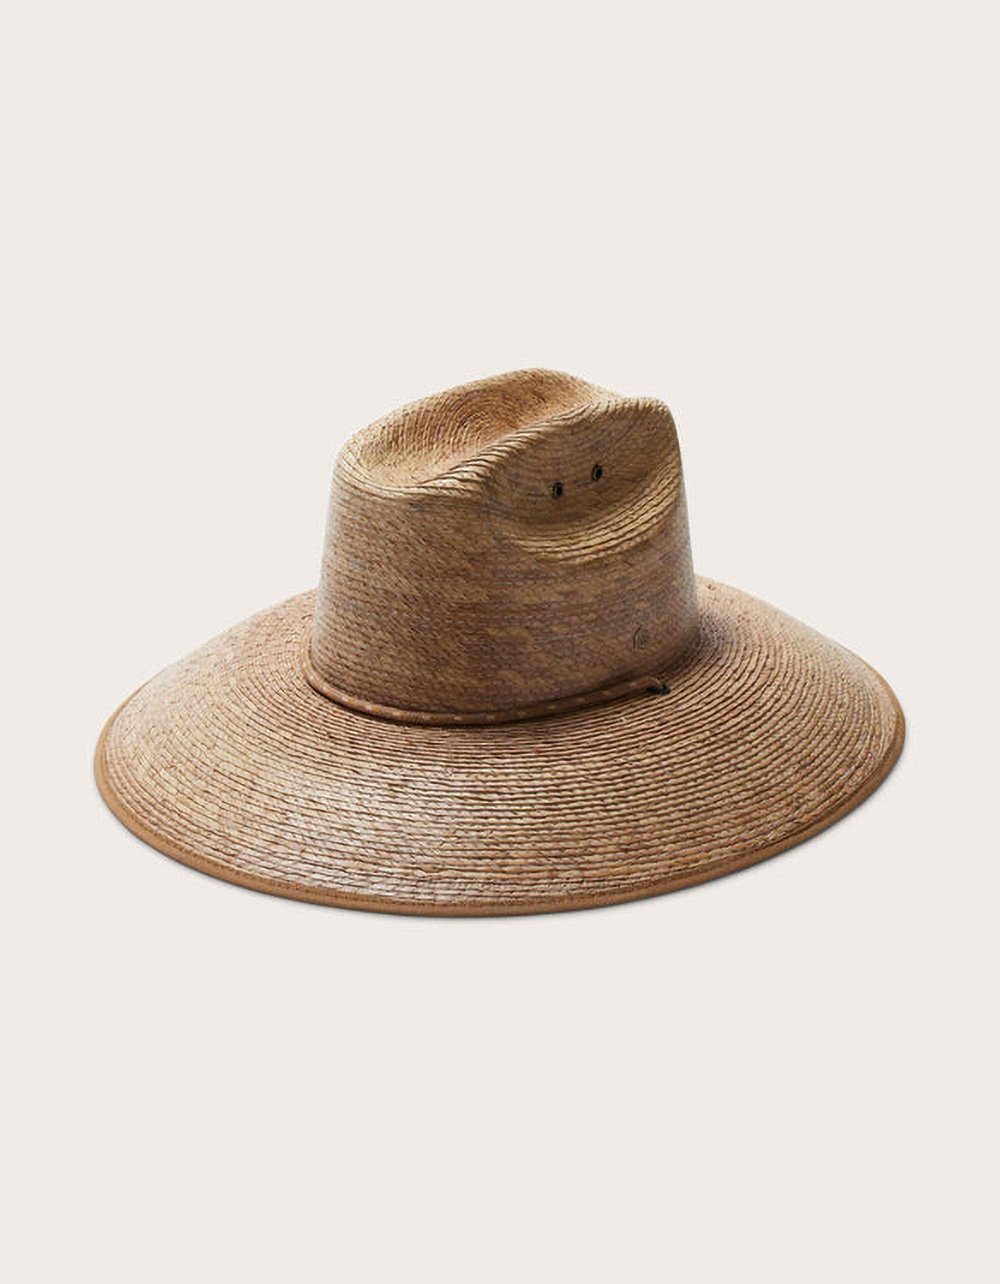 HEMLOCK HAT CO. Santos Straw Lifeguard Hat